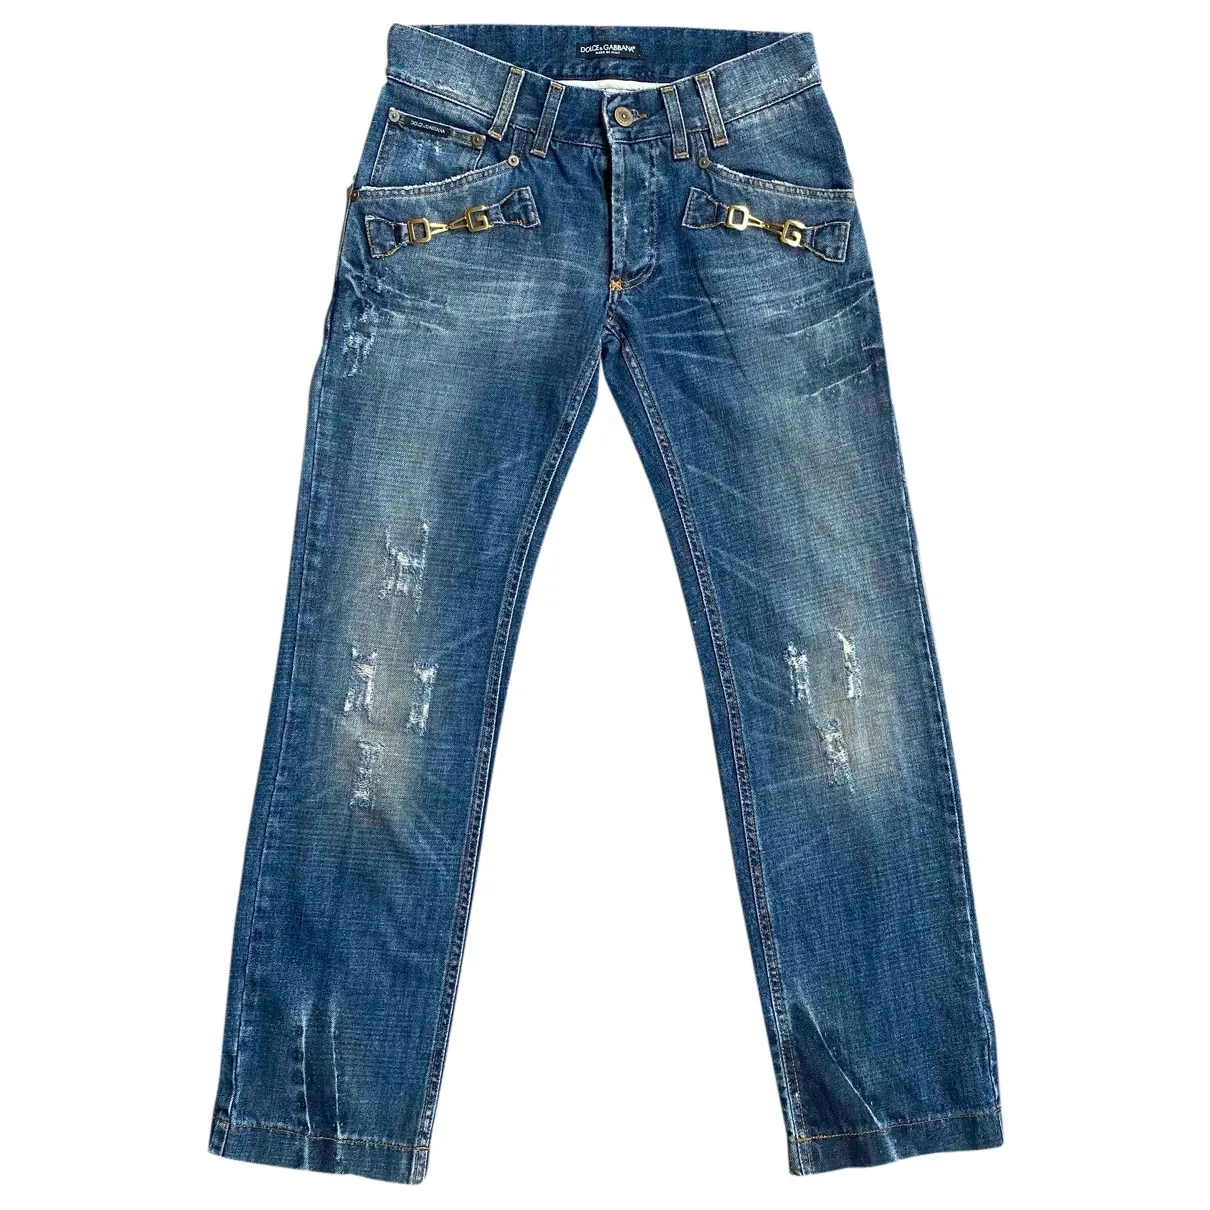 Blue Denim - Jeans Jeans Dolce & Gabbana - Vintage